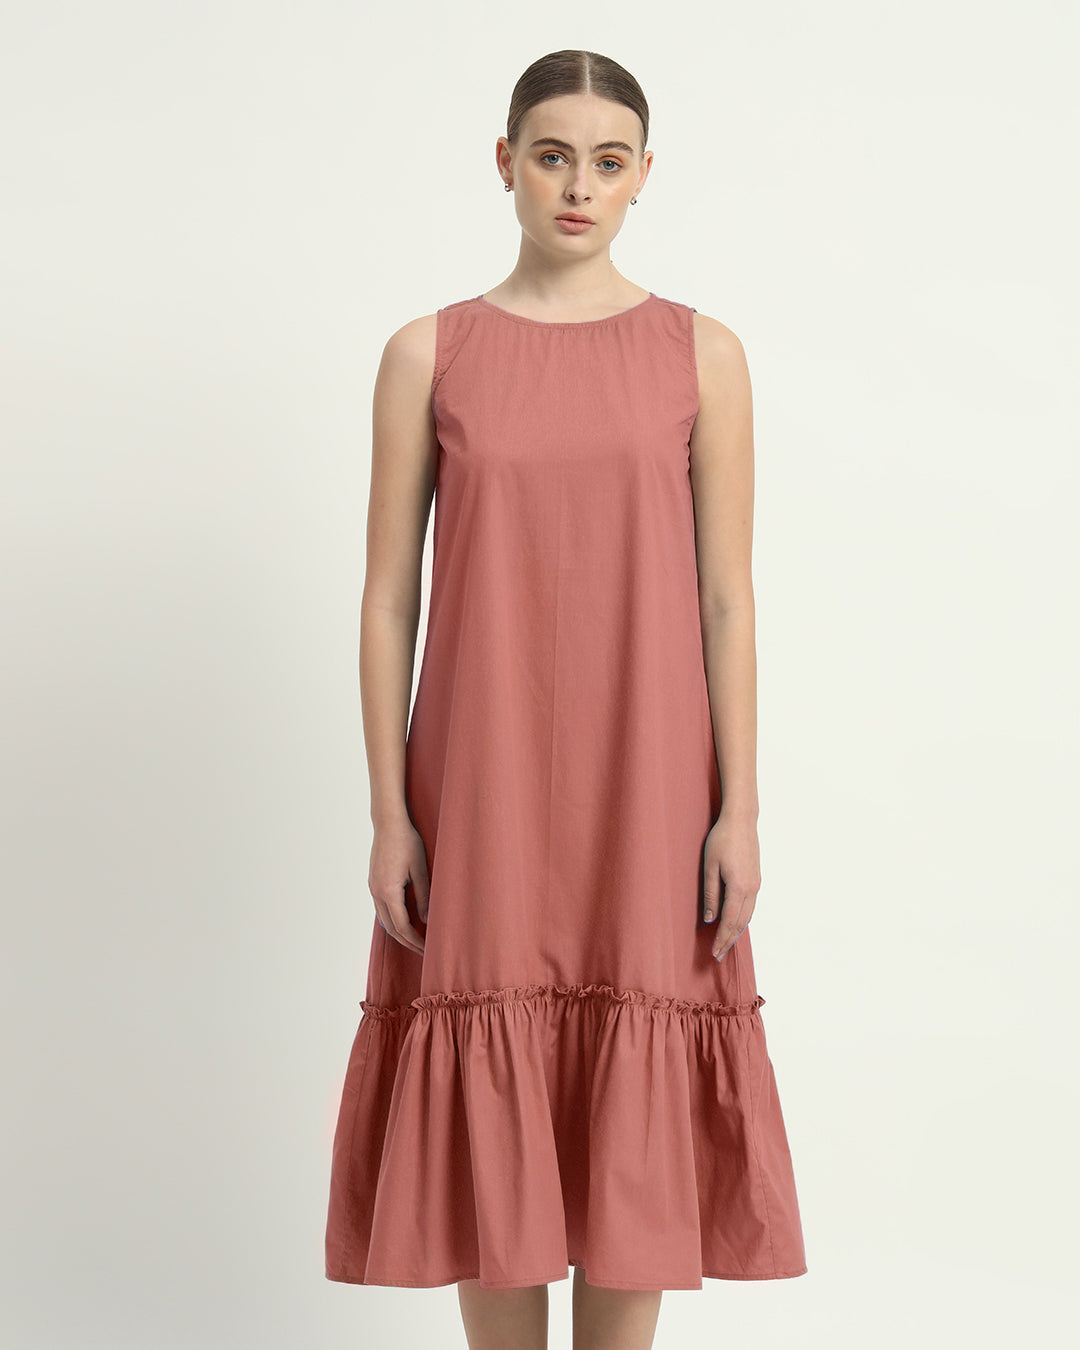 The Ivory Pink Millis Cotton Dress